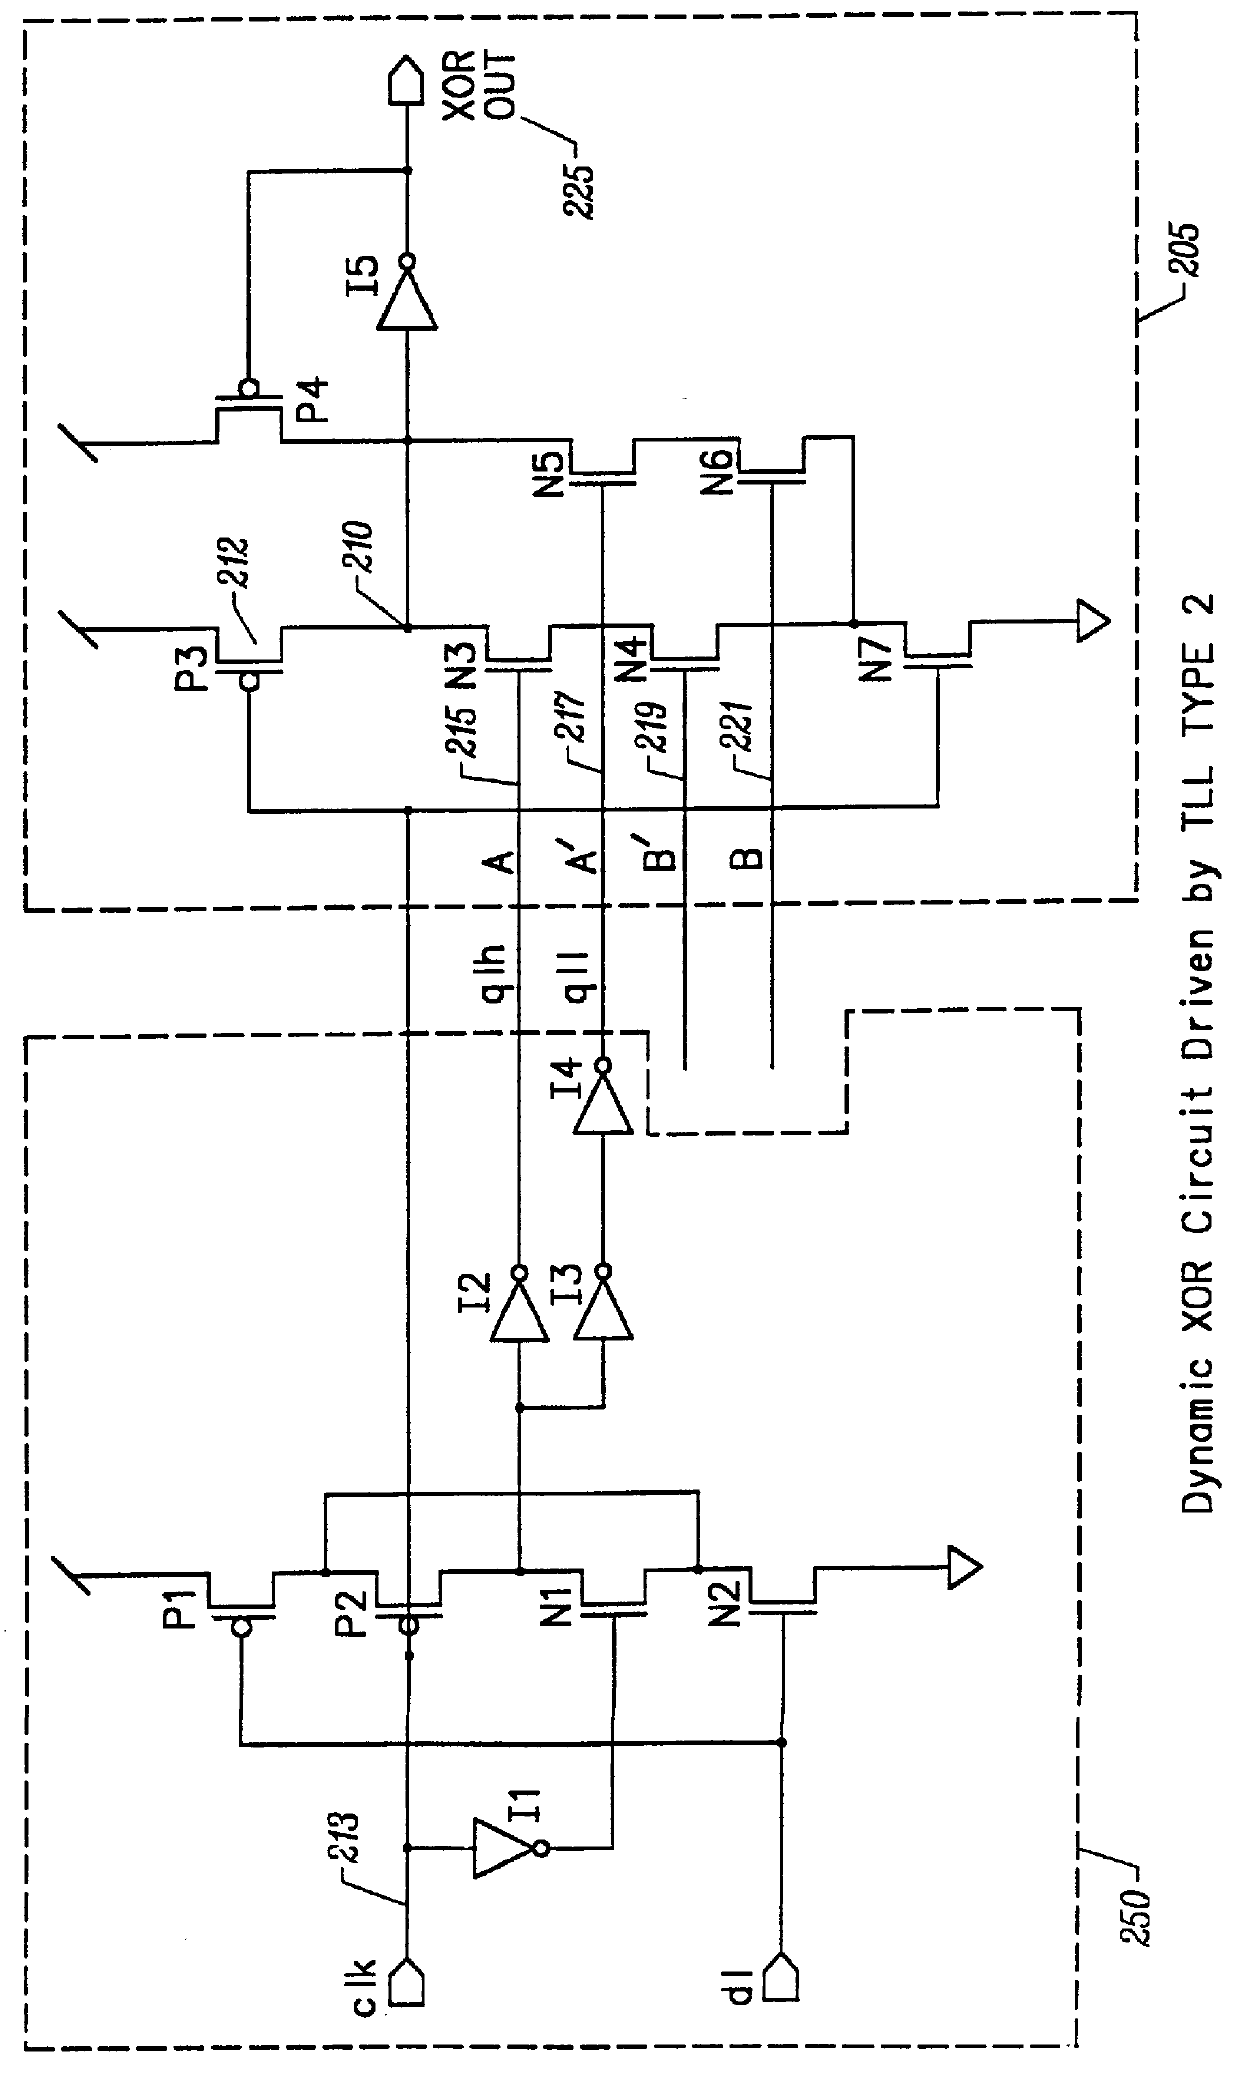 Dynamic latch circuitry